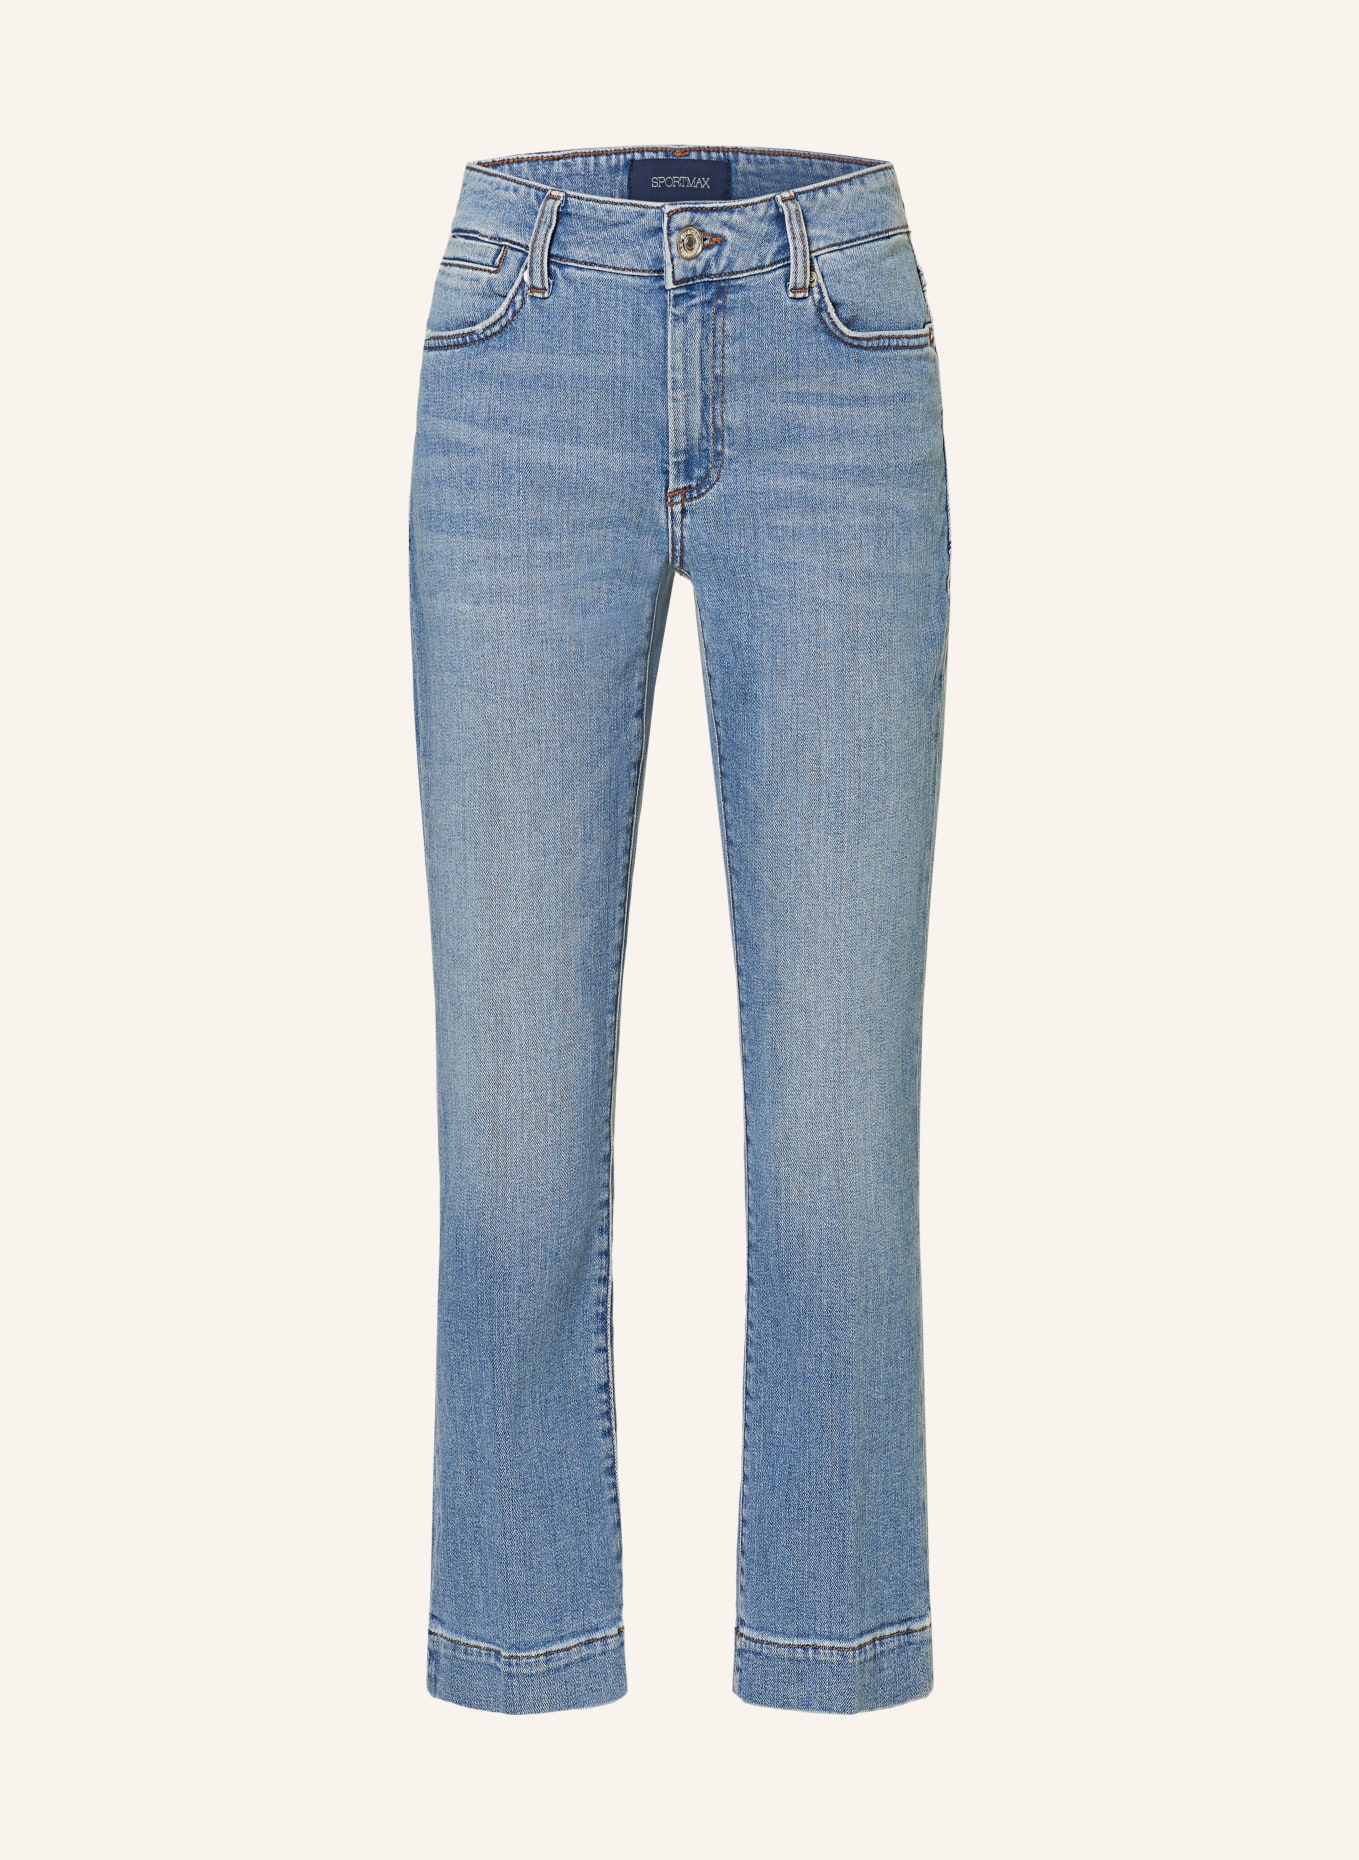 SPORTMAX 7/8-Jeans UMBRIA, Farbe: 005 MIDNIGHTBLUE (Bild 1)